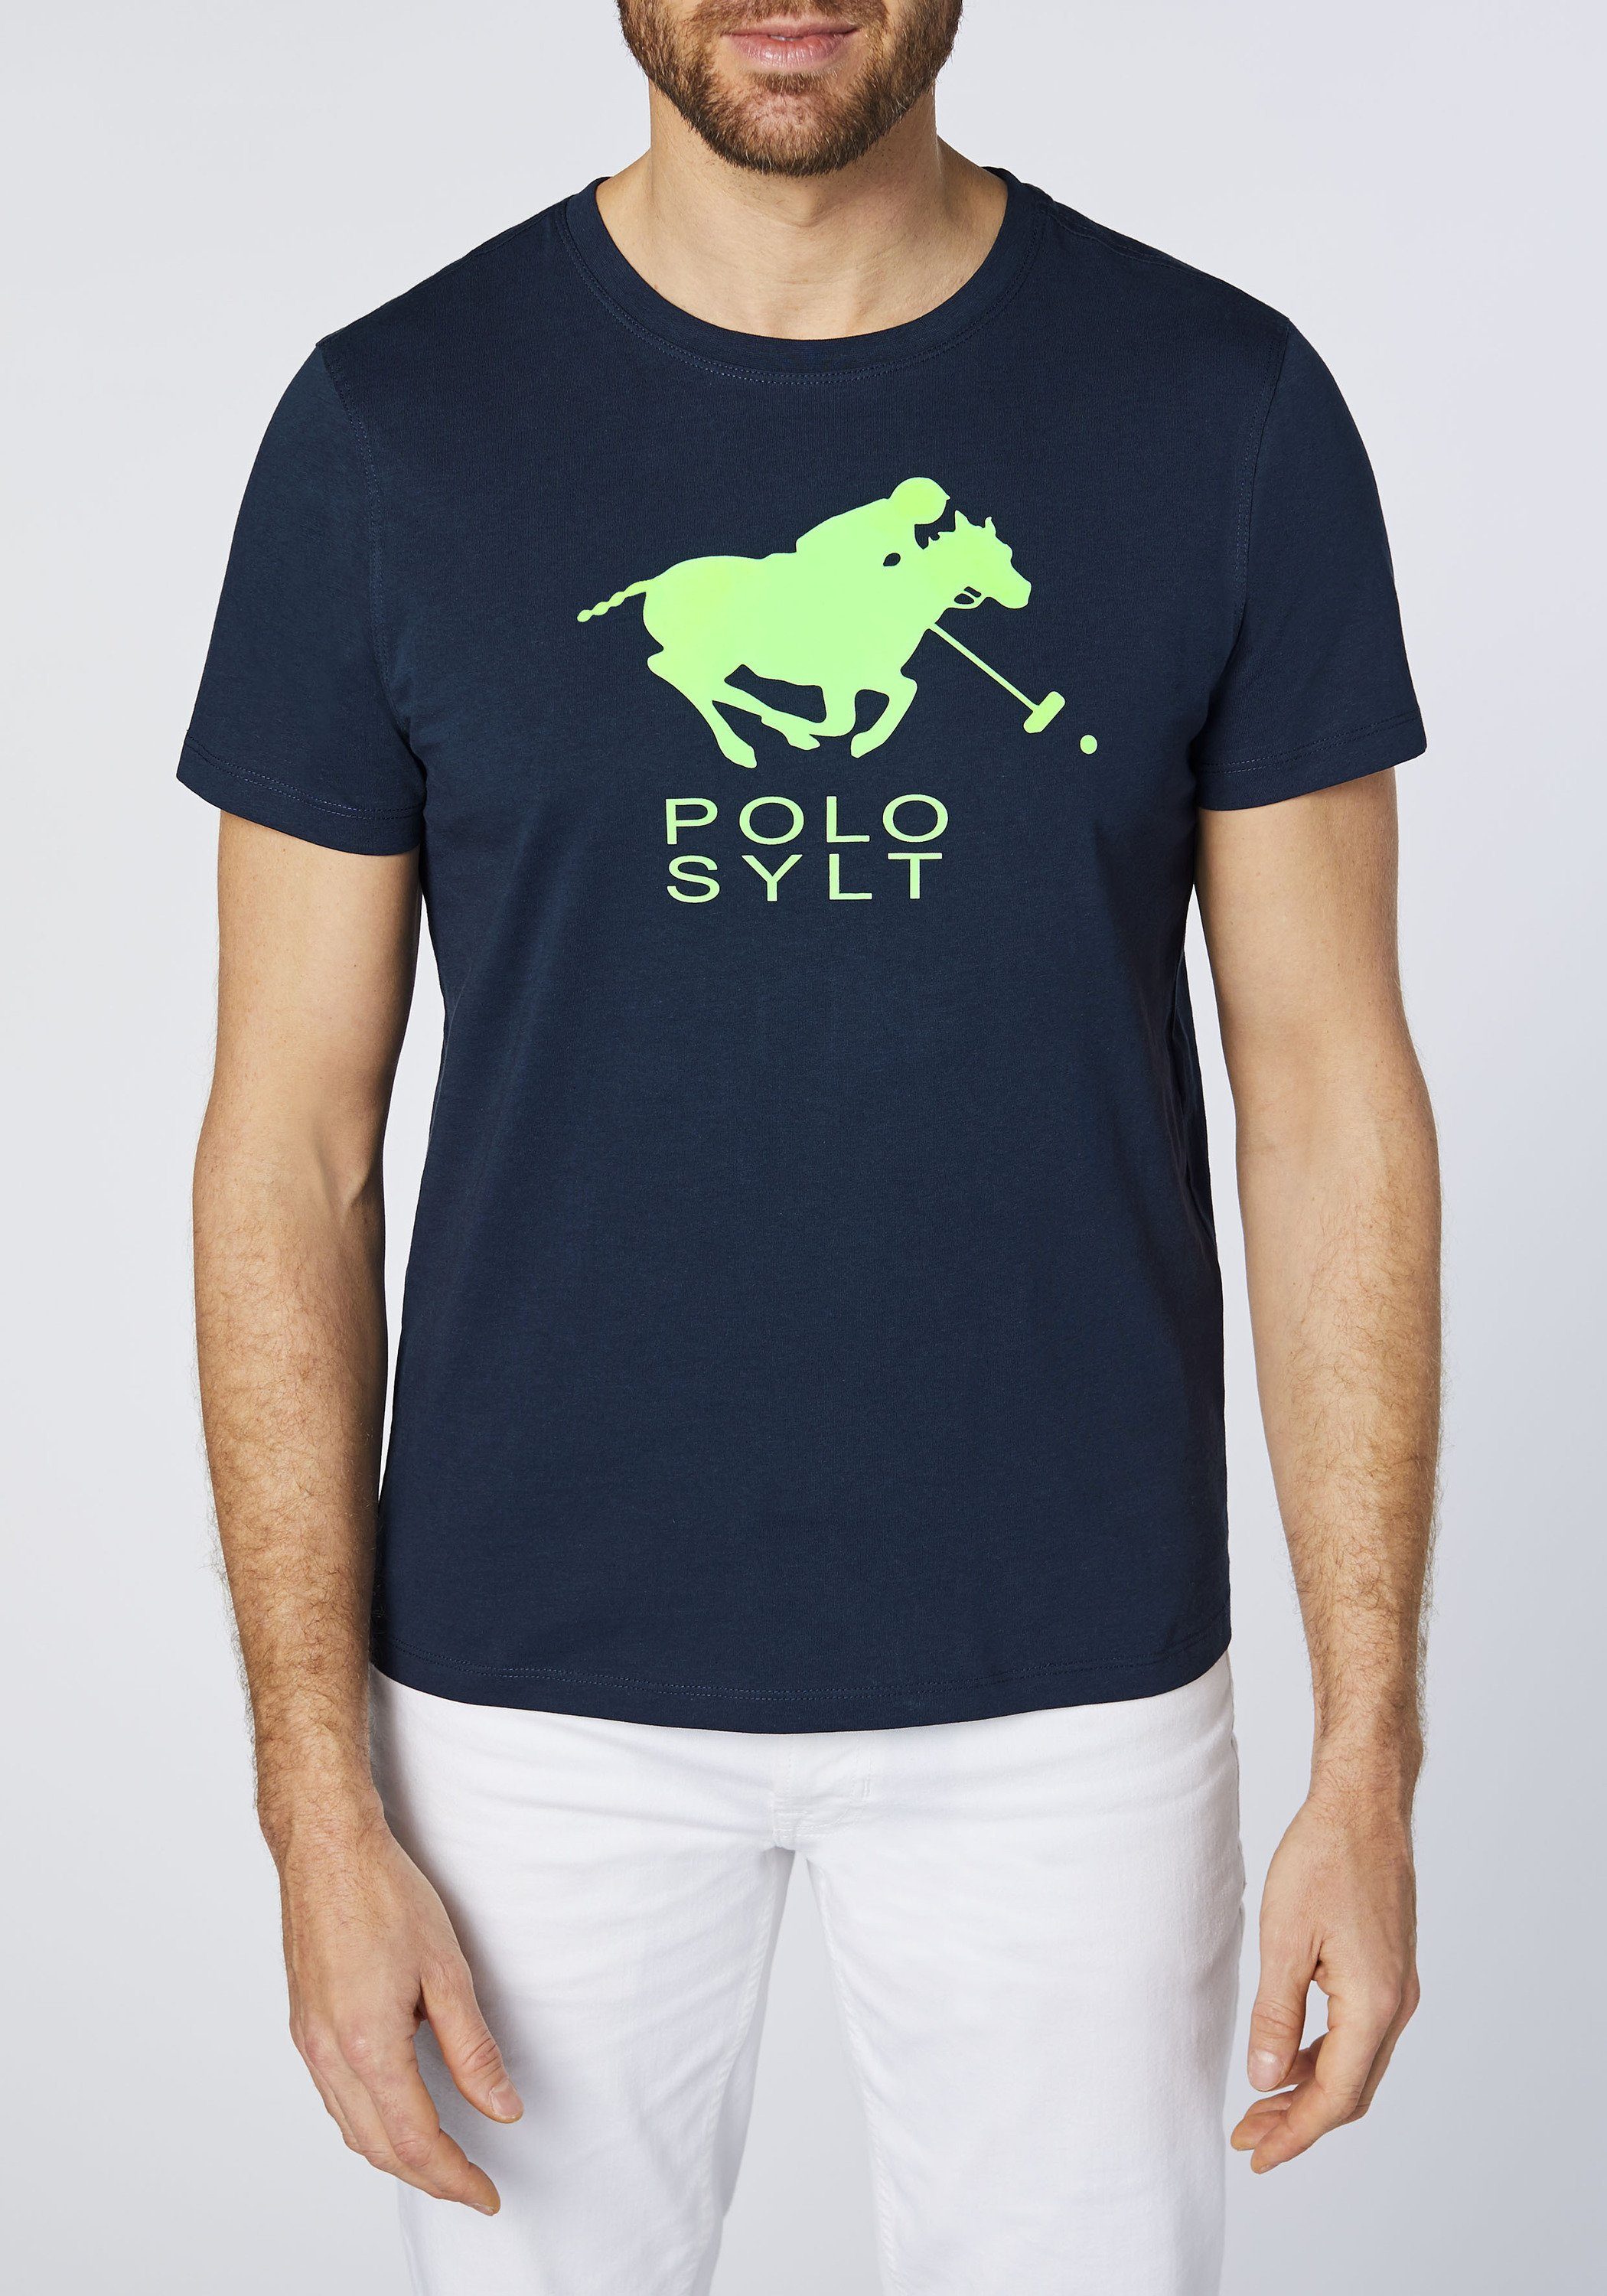 Polo Sylt Logo Print-Shirt Total Frontprint mit Neon Eclipse